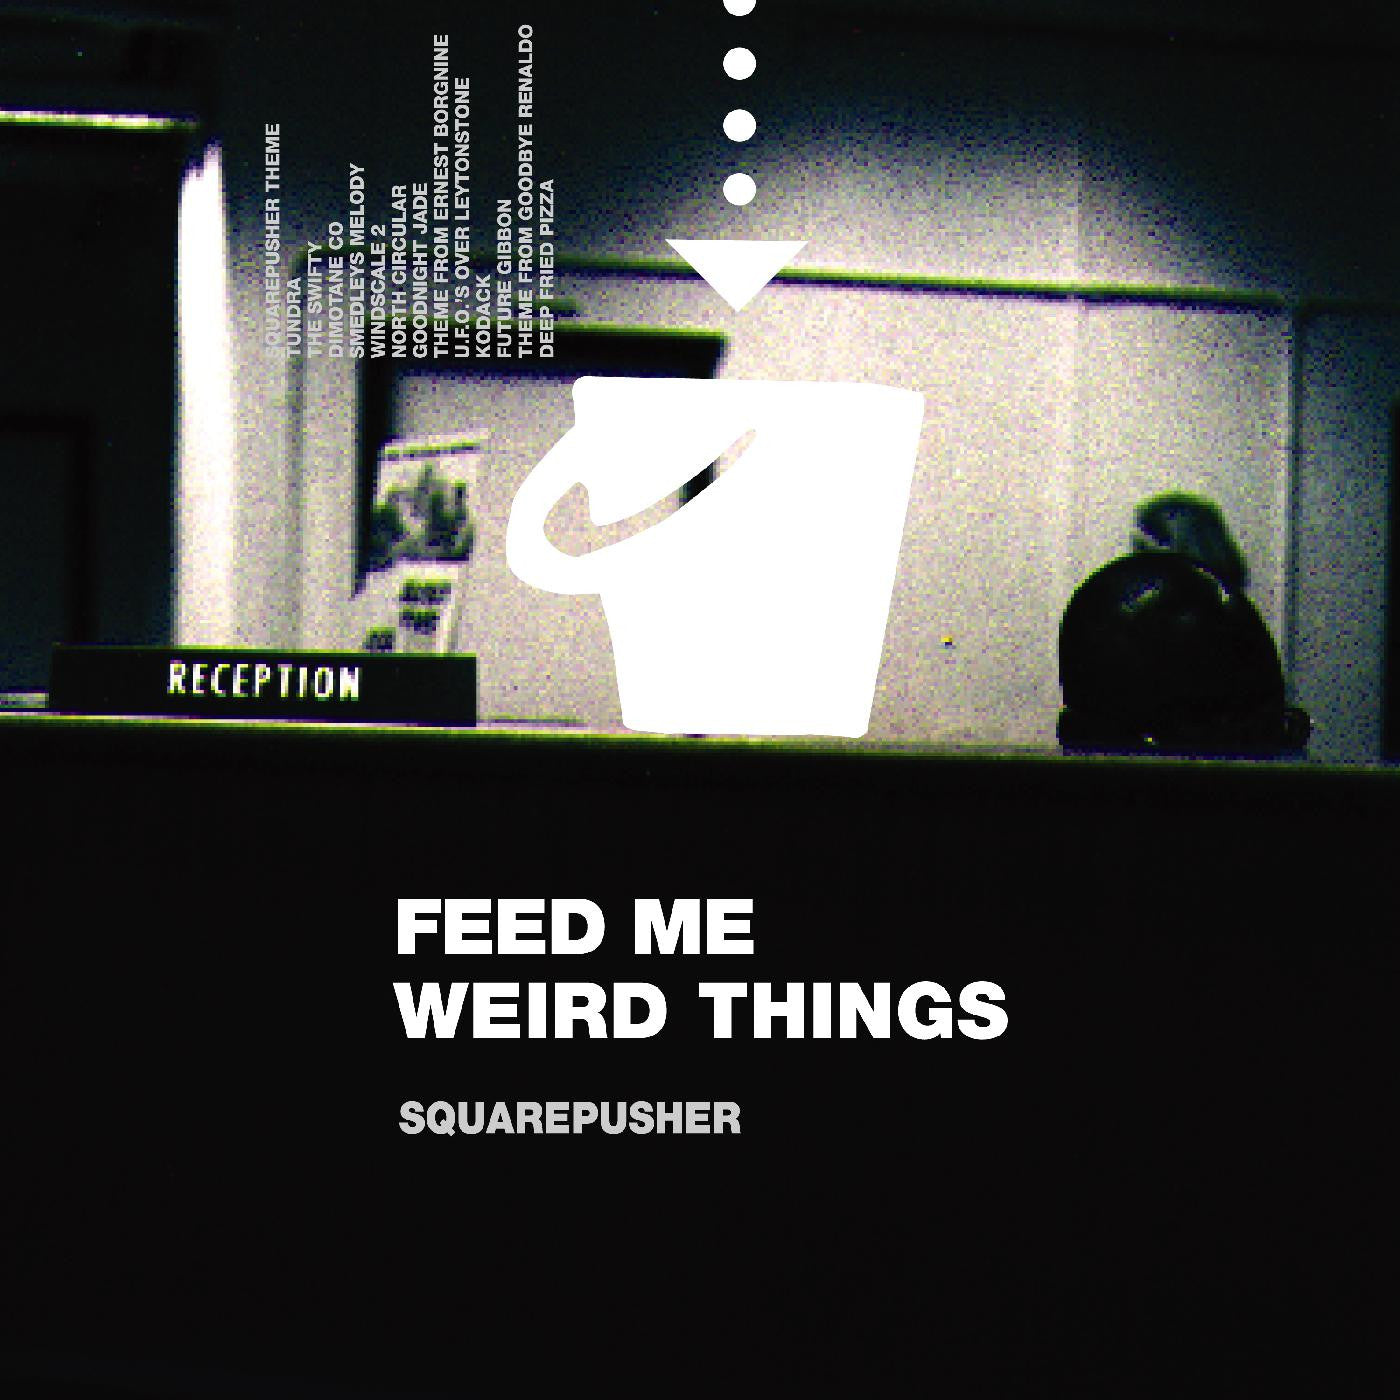 SQUAREPUSHER - FEED ME WEIRD THINGS Vinyl 2xLP + 10"